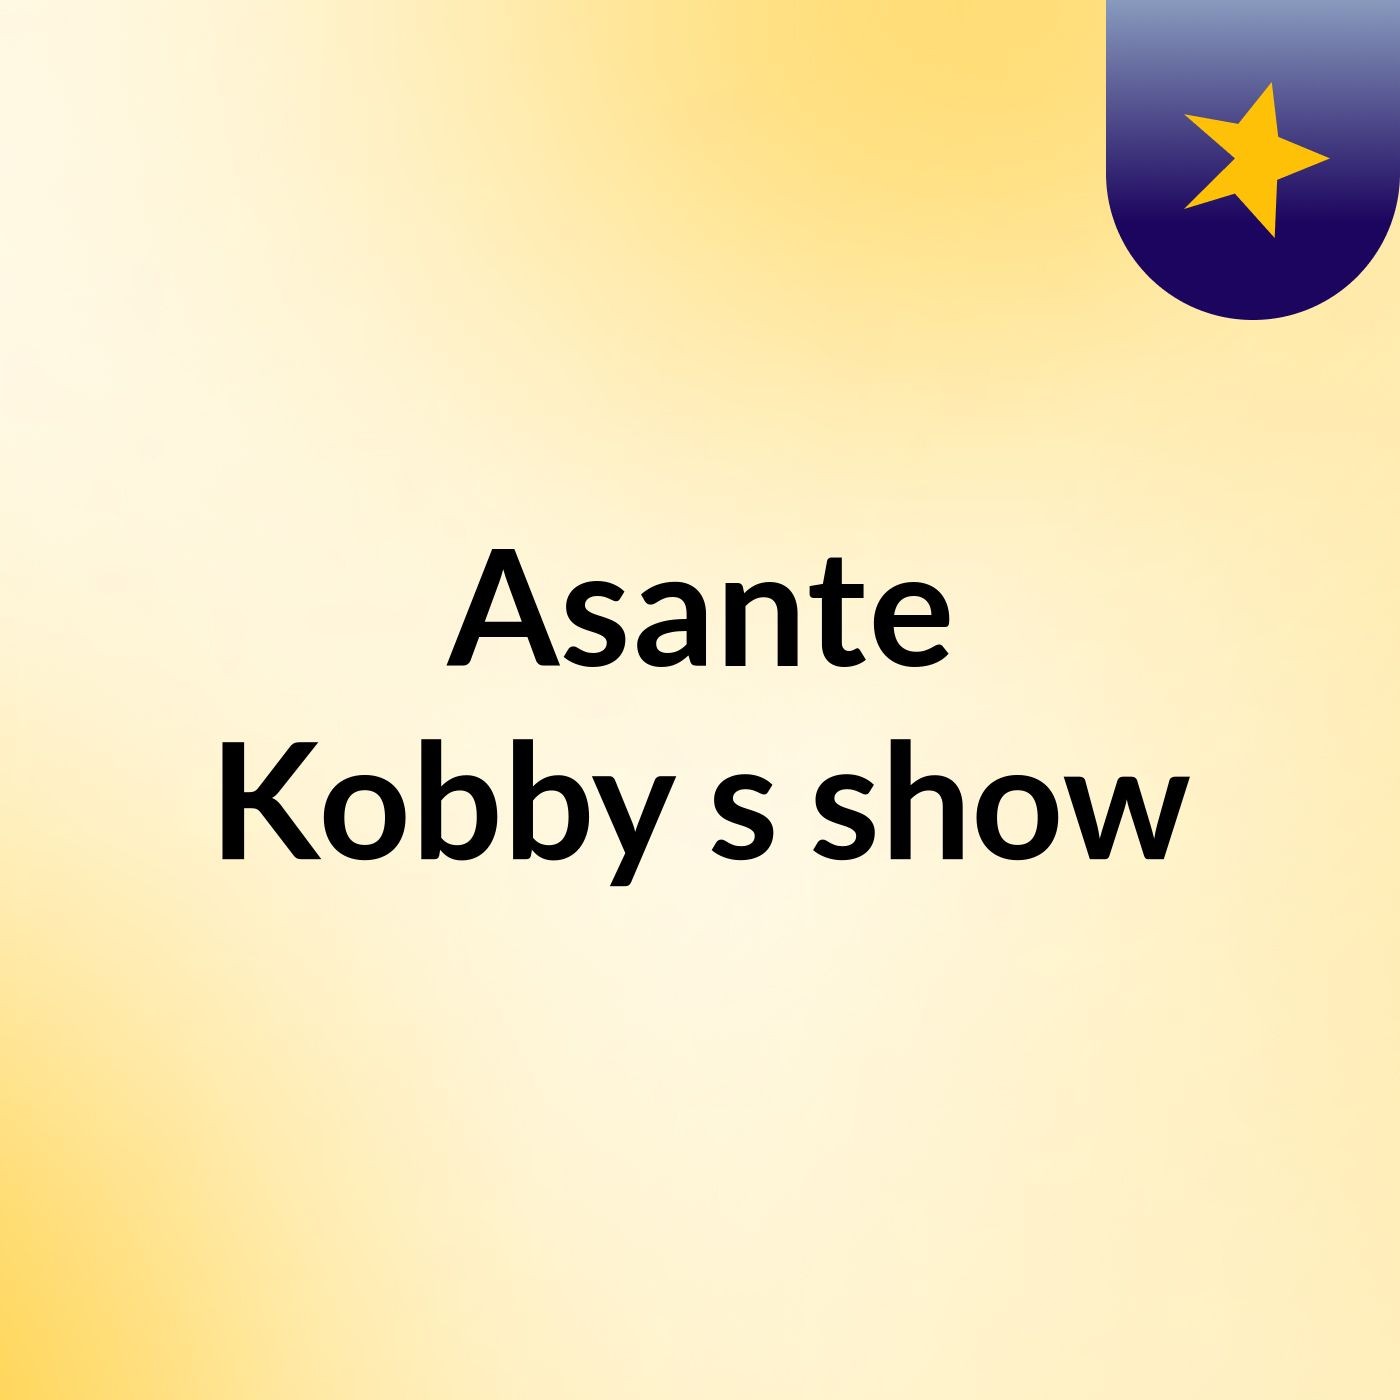 Asante Kobby's show